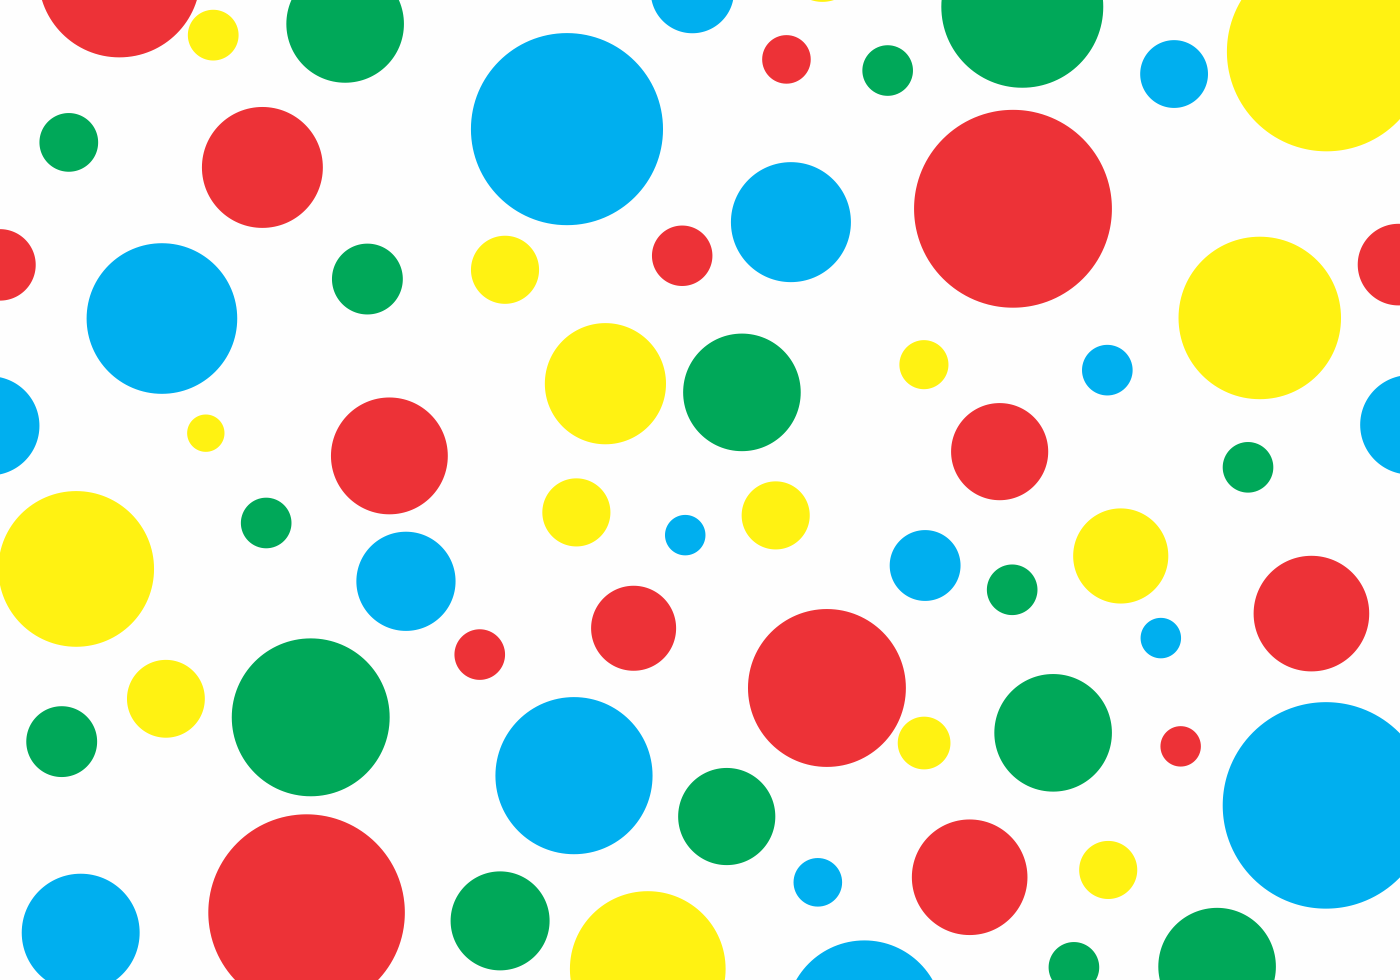 Baby Polka Dots Patterns Free Vector - Download Free Vector Art ...